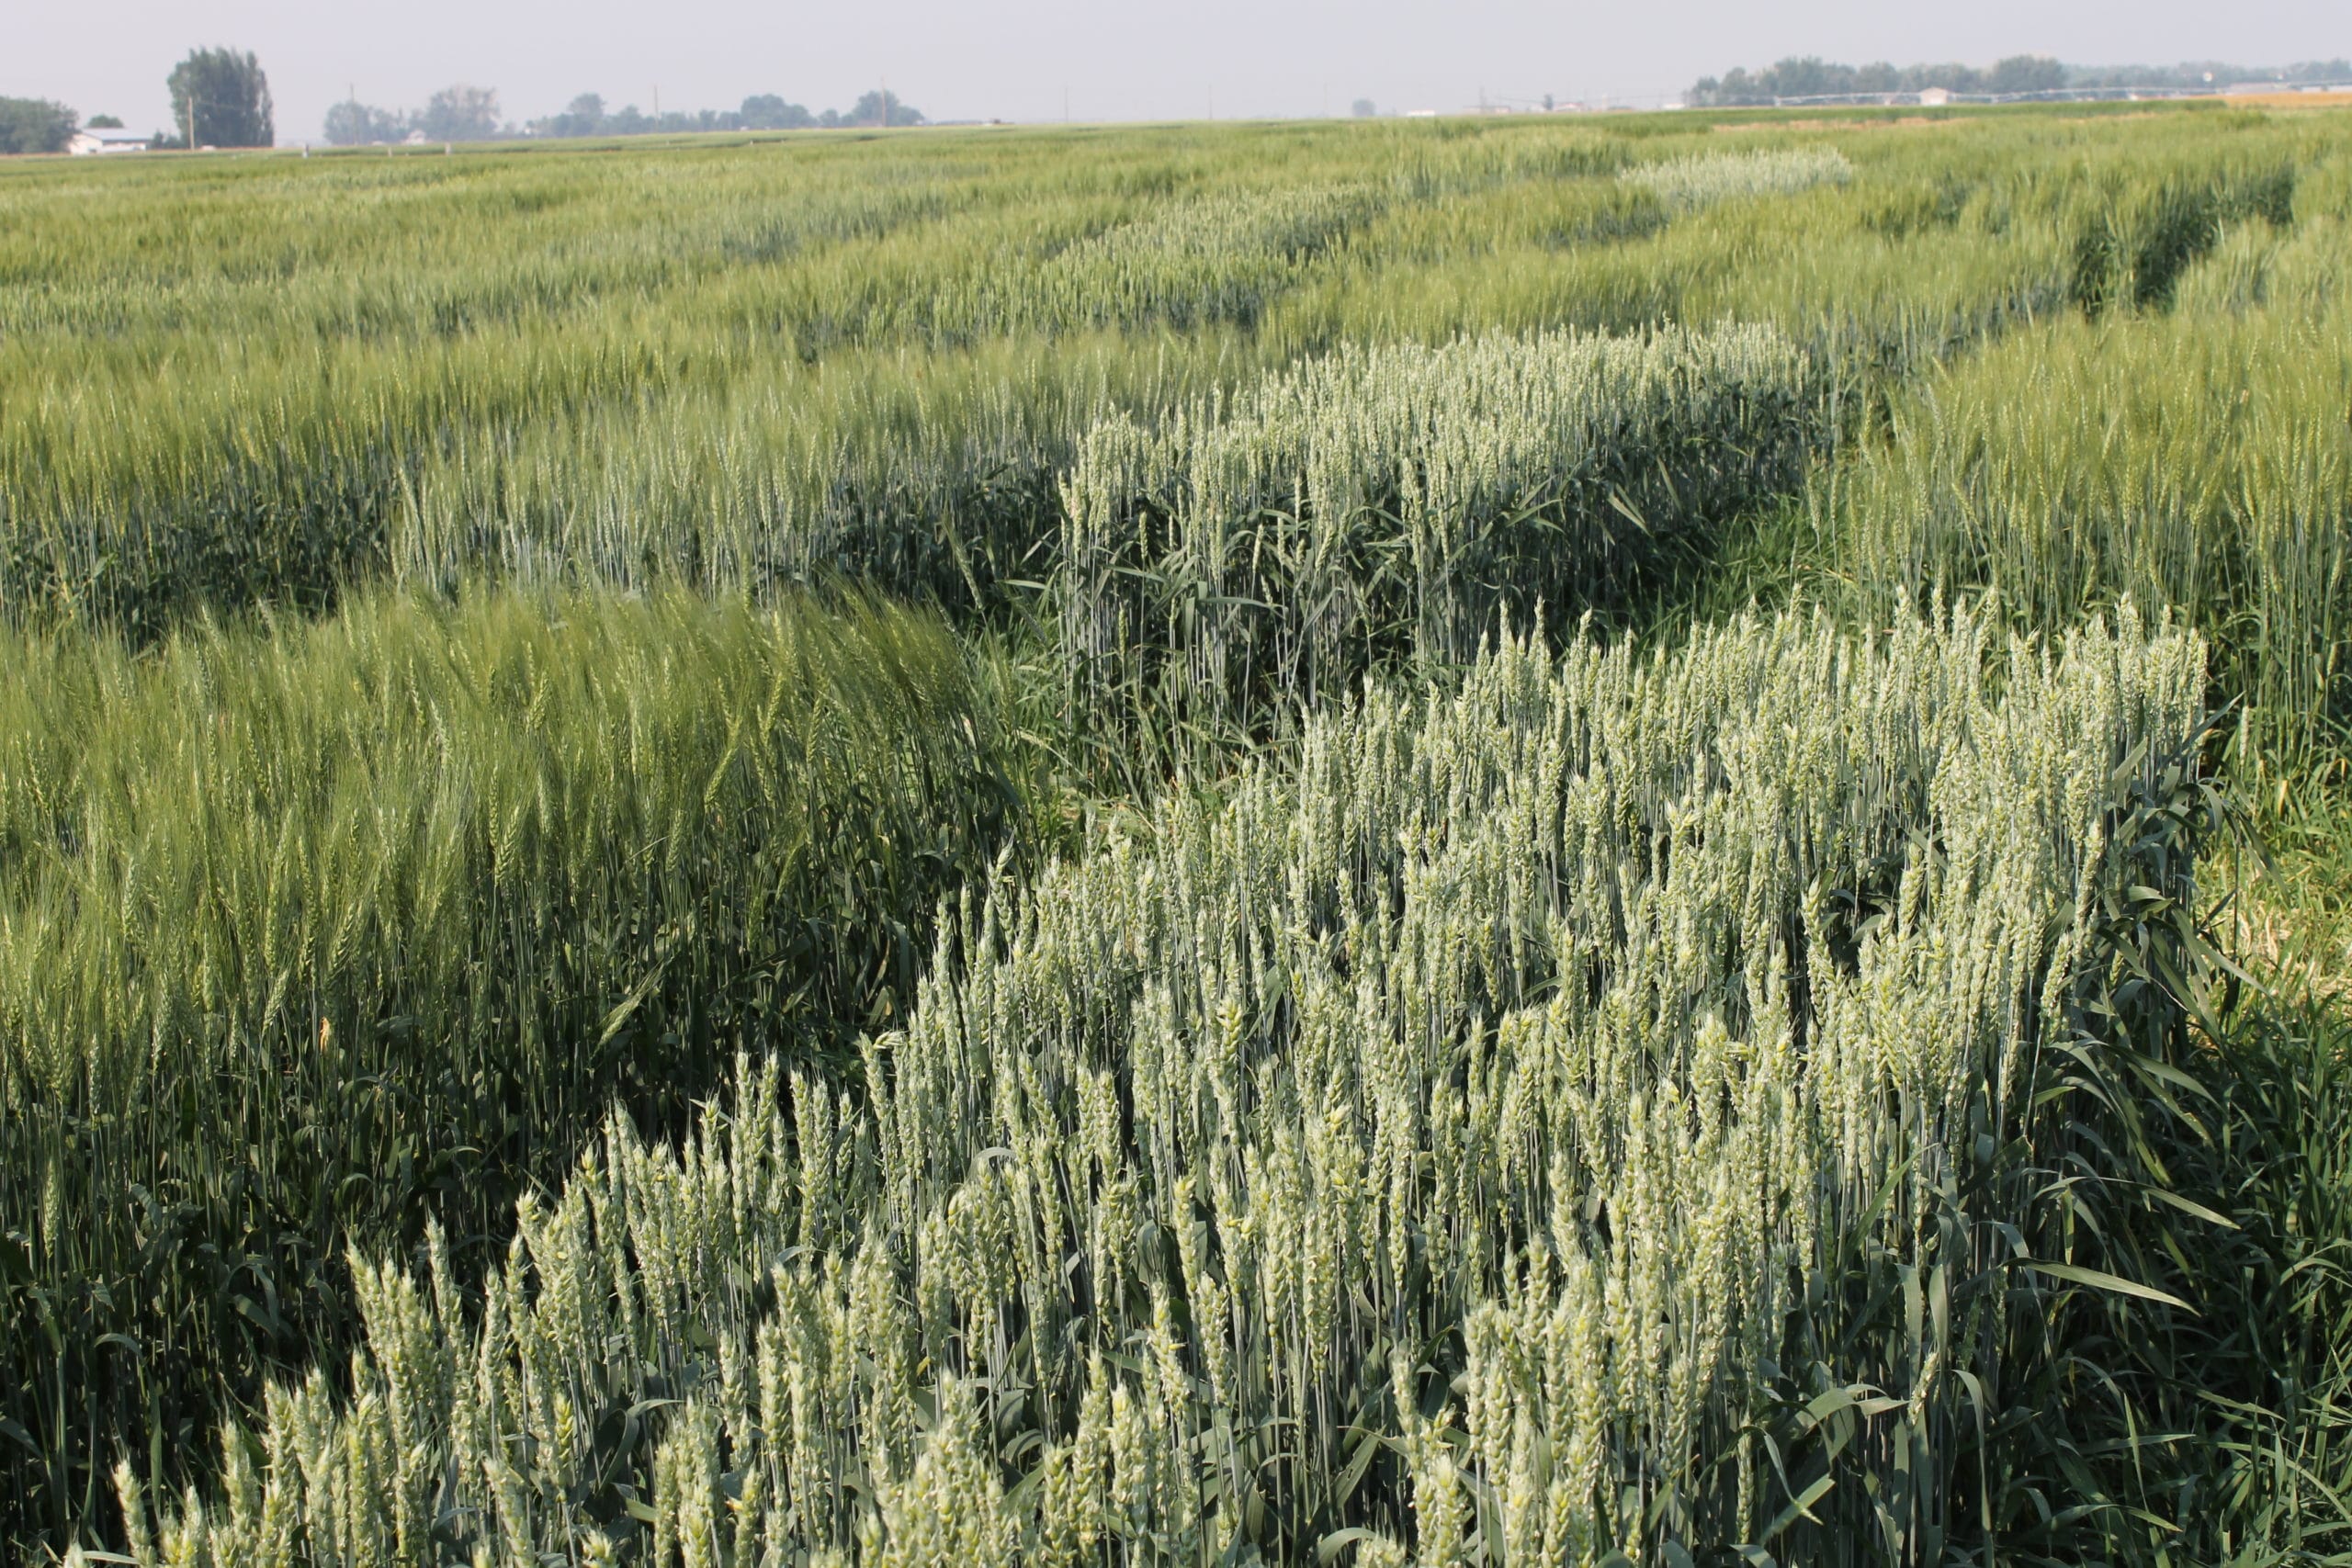 Regional Variety Trial plot of CPSR wheat